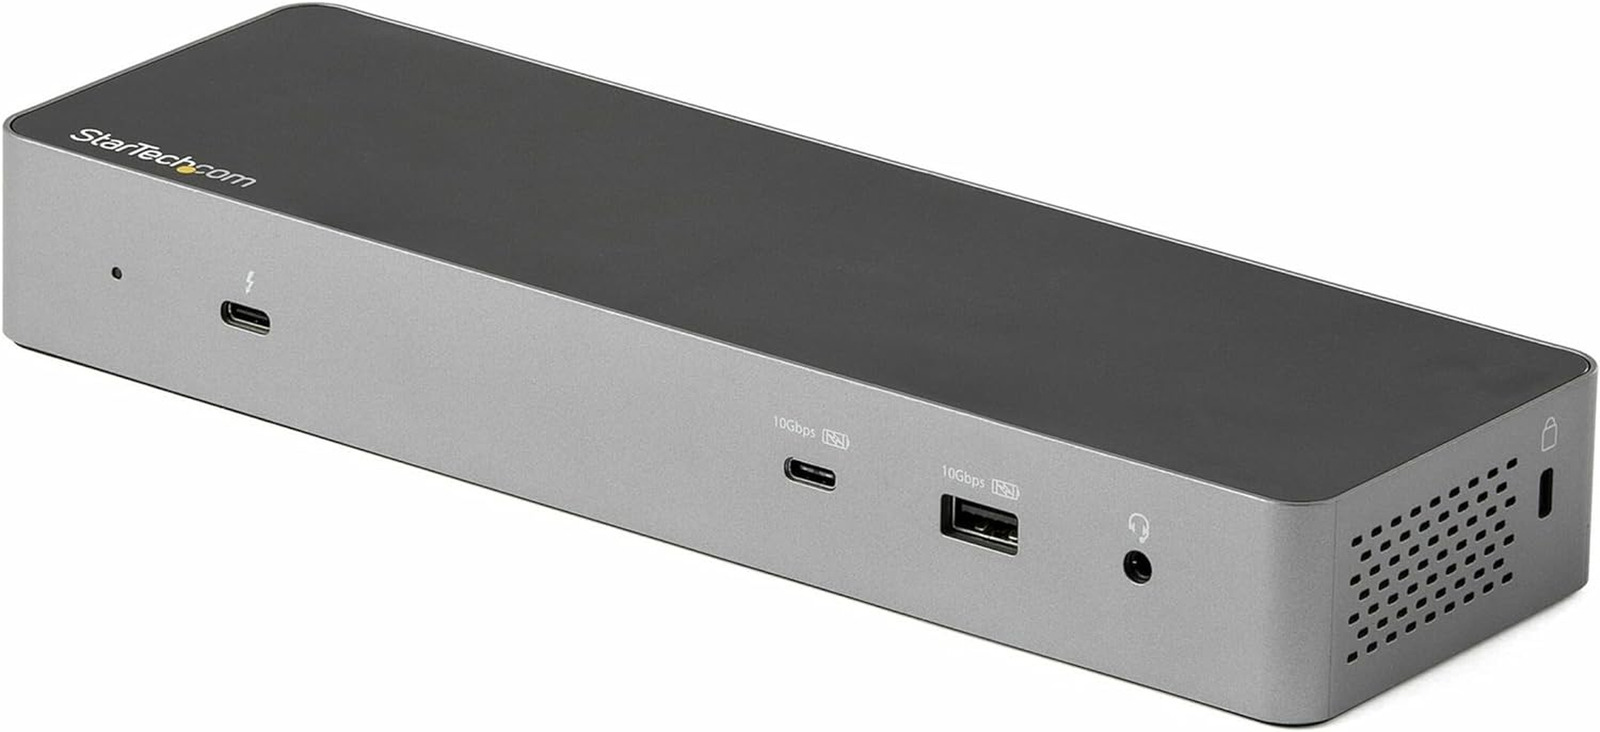 Thunderbolt 3 Dock W/USB-C Host Compatibility - Dual 4K 60Hz Displayport 1.4 or 